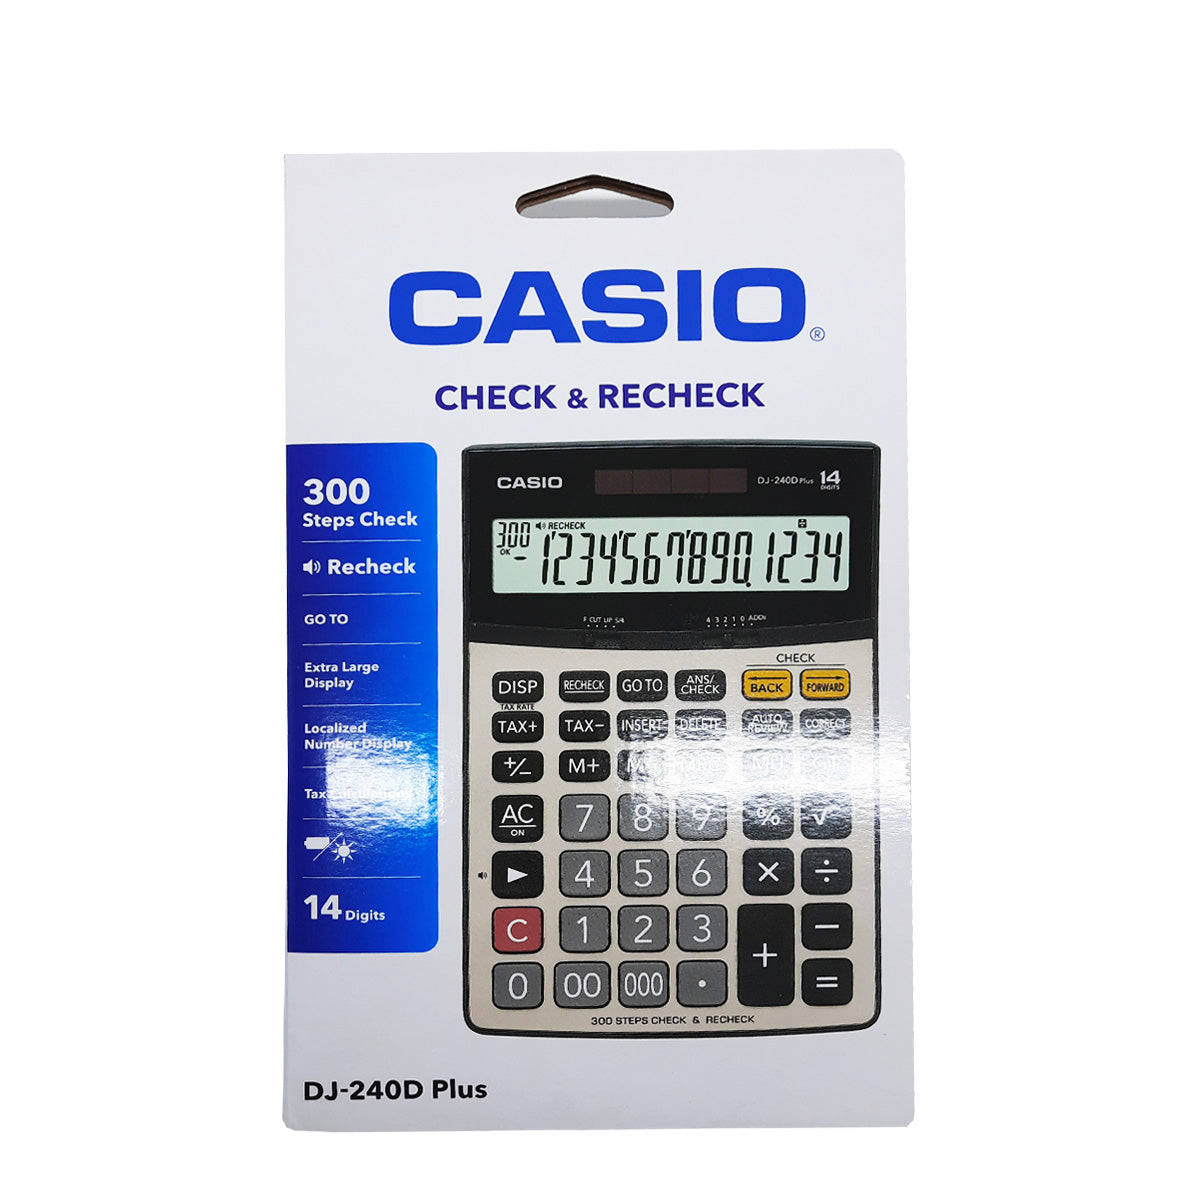 Casio DJ-250 Plus Check & Recheck calculator Online in Abu Dhabi, Dubai - UAE | najmaonline.com